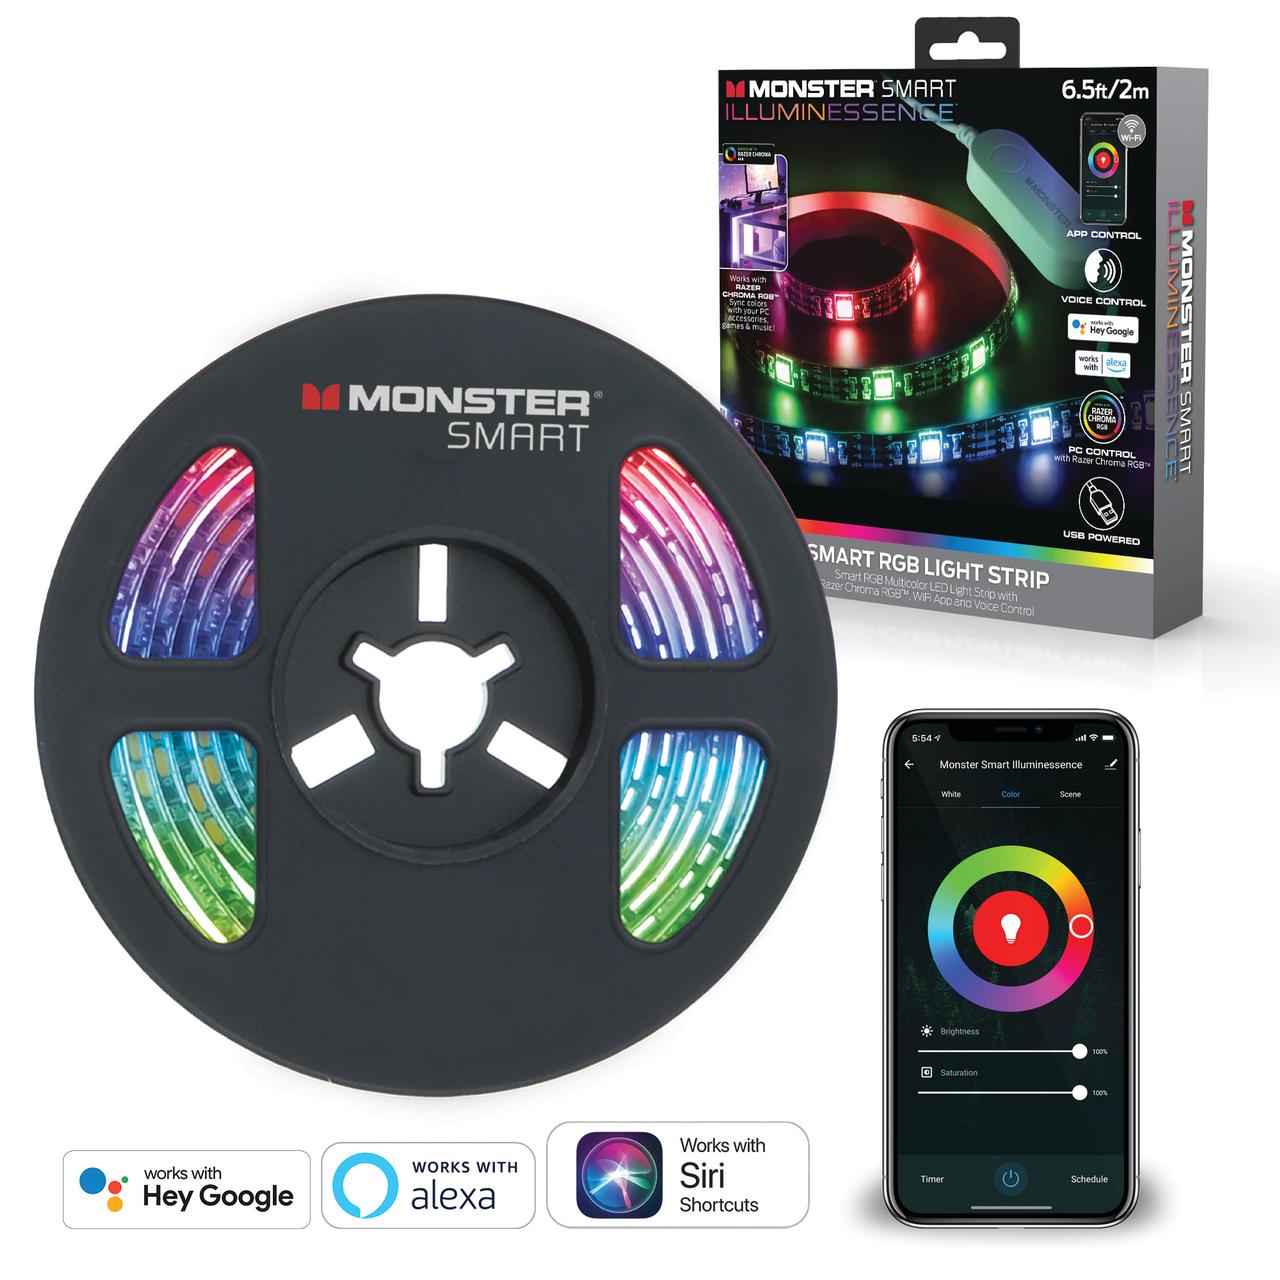 Monster LED Smart 6.5ft Multi-Color Light Strip, Mobile App & Voice Controlled, USB Plug - image 1 of 12